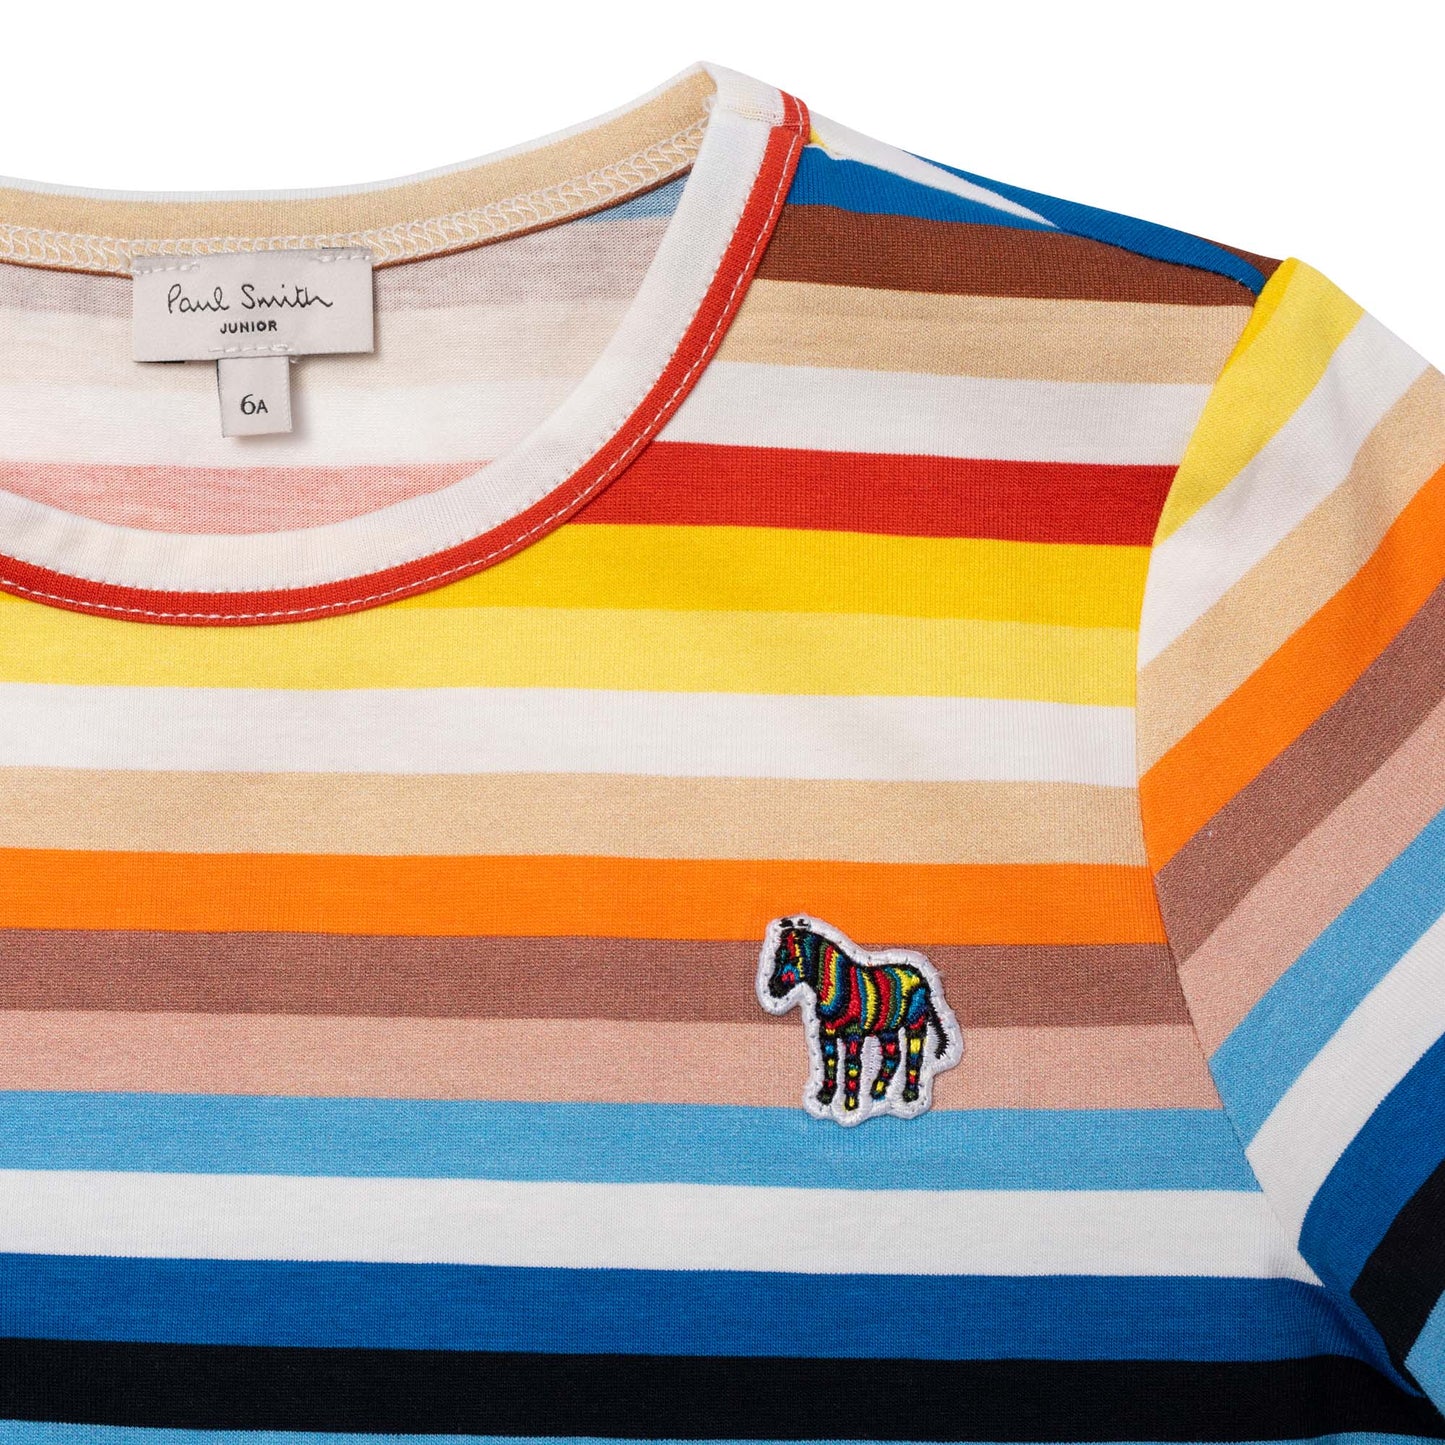 Paul Smith Junior Classic Striped  T-Shirt